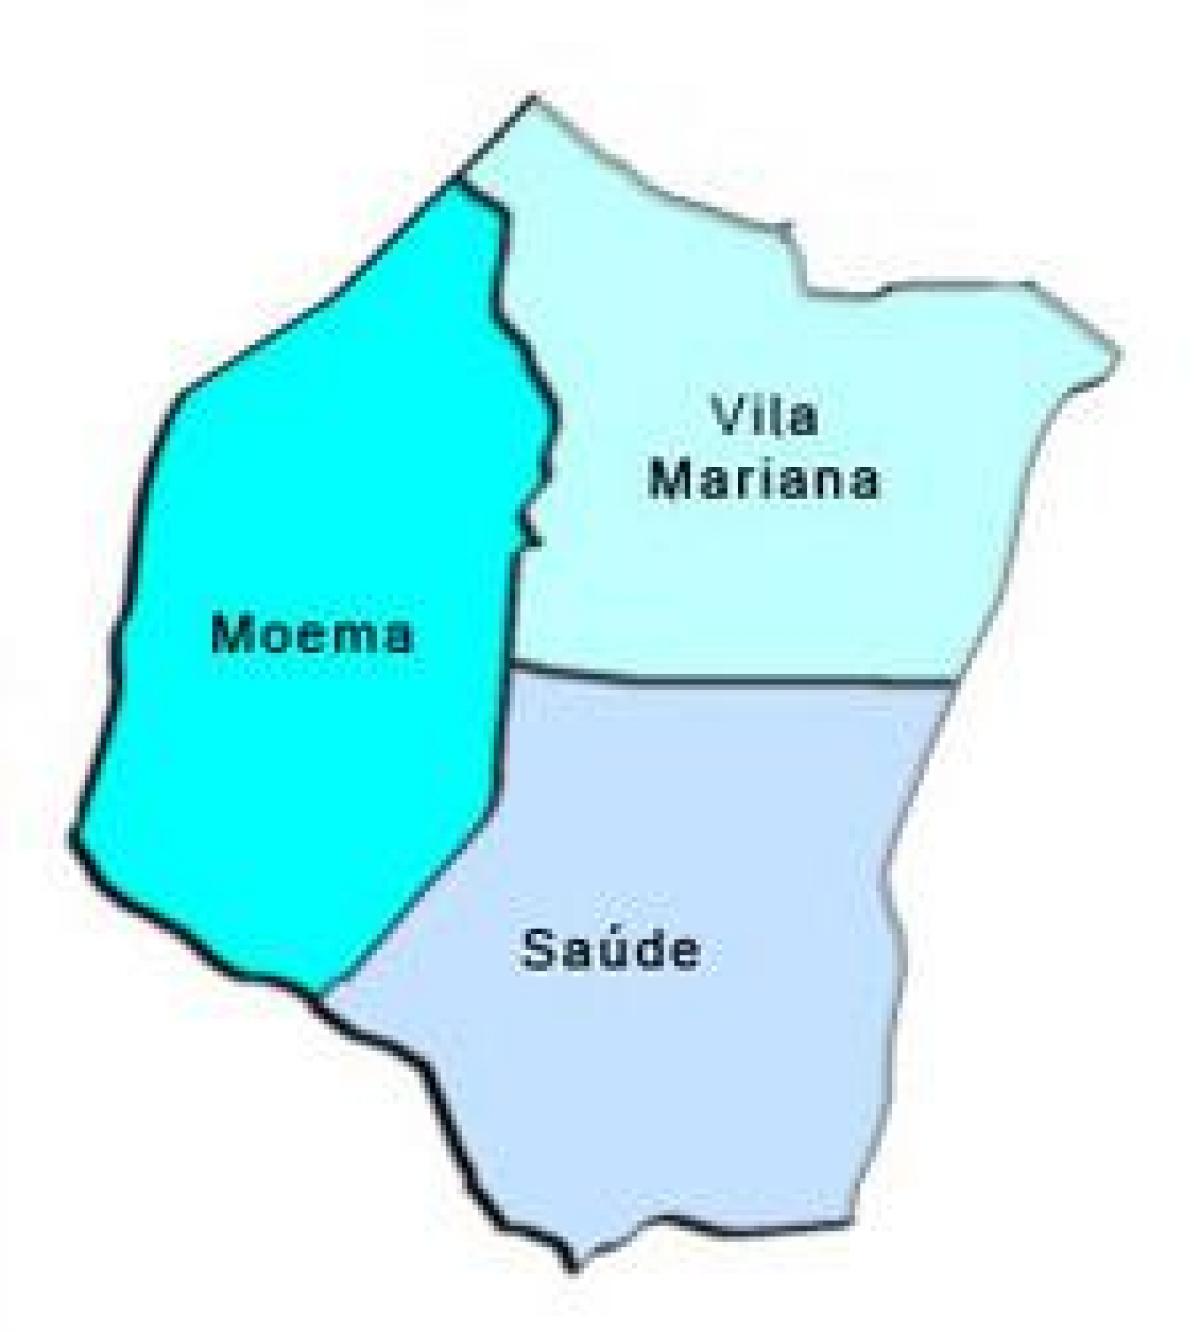 Mapa Vila Mariana sub-prefektúra